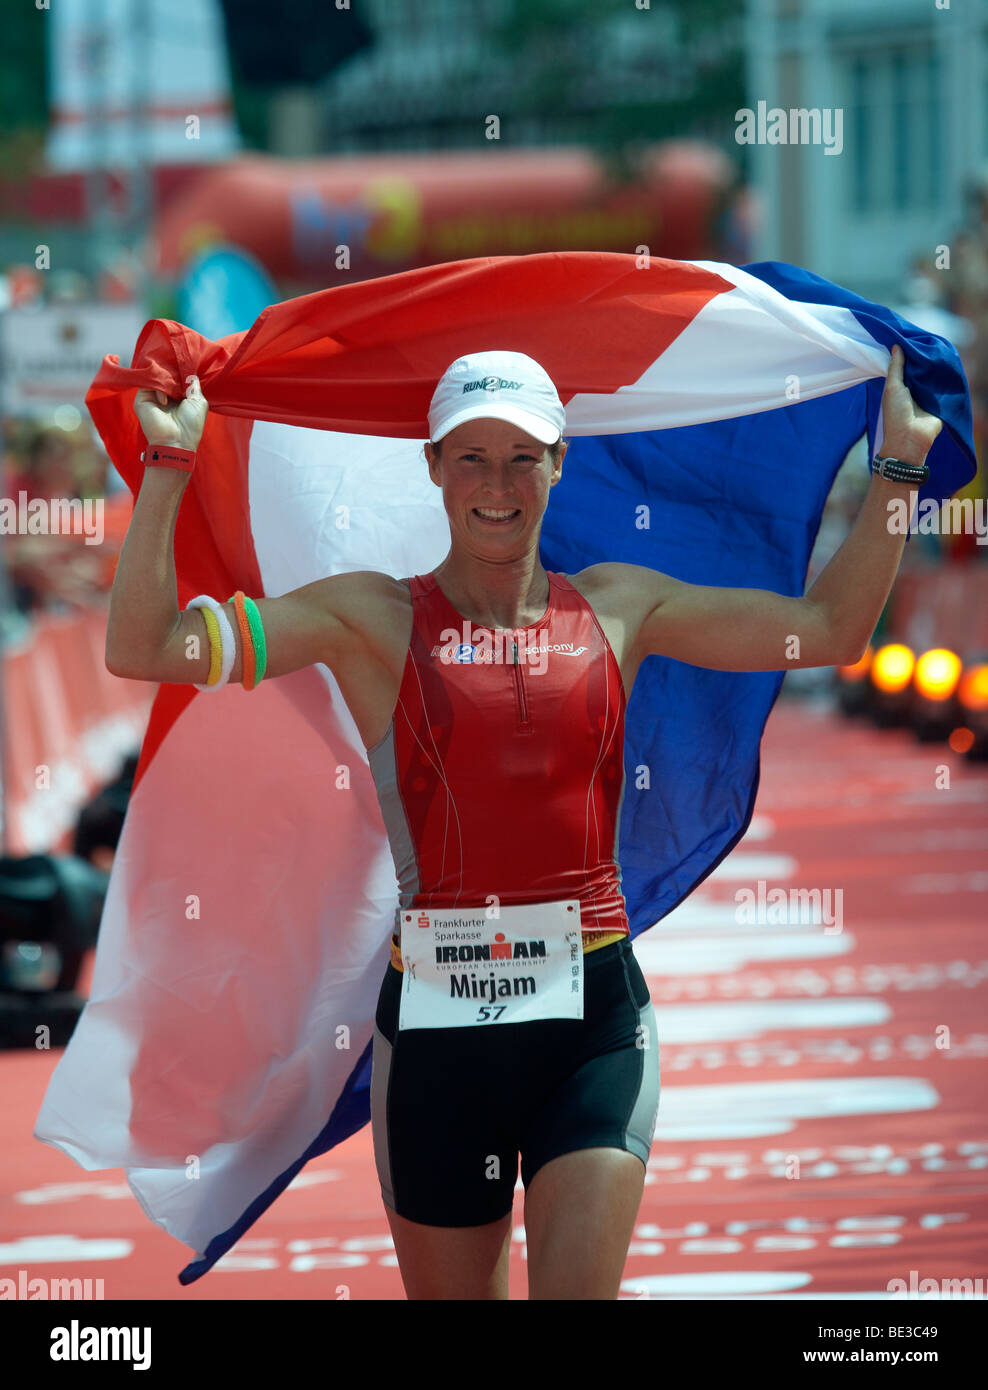 Triathlon, Mirjam Weerd, Netherlands, at the finish line, Ironman Germany, Frankfurt, Hesse, Germany, Europe Stock Photo